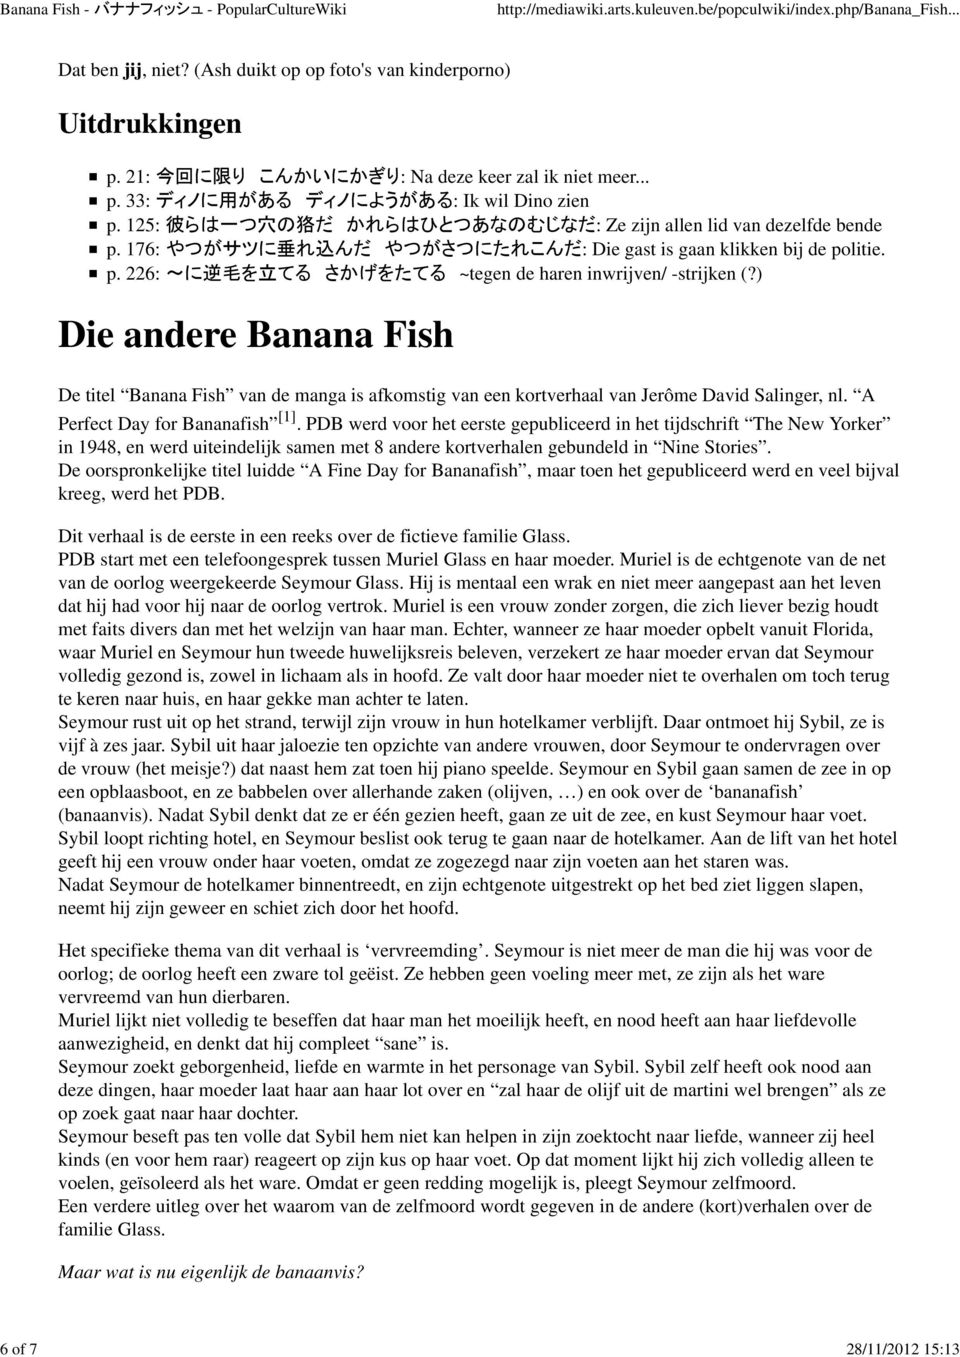 ) Die andere Banana Fish De titel Banana Fish van de manga is afkomstig van een kortverhaal van Jerôme David Salinger, nl. A Perfect Day for Bananafish [1].